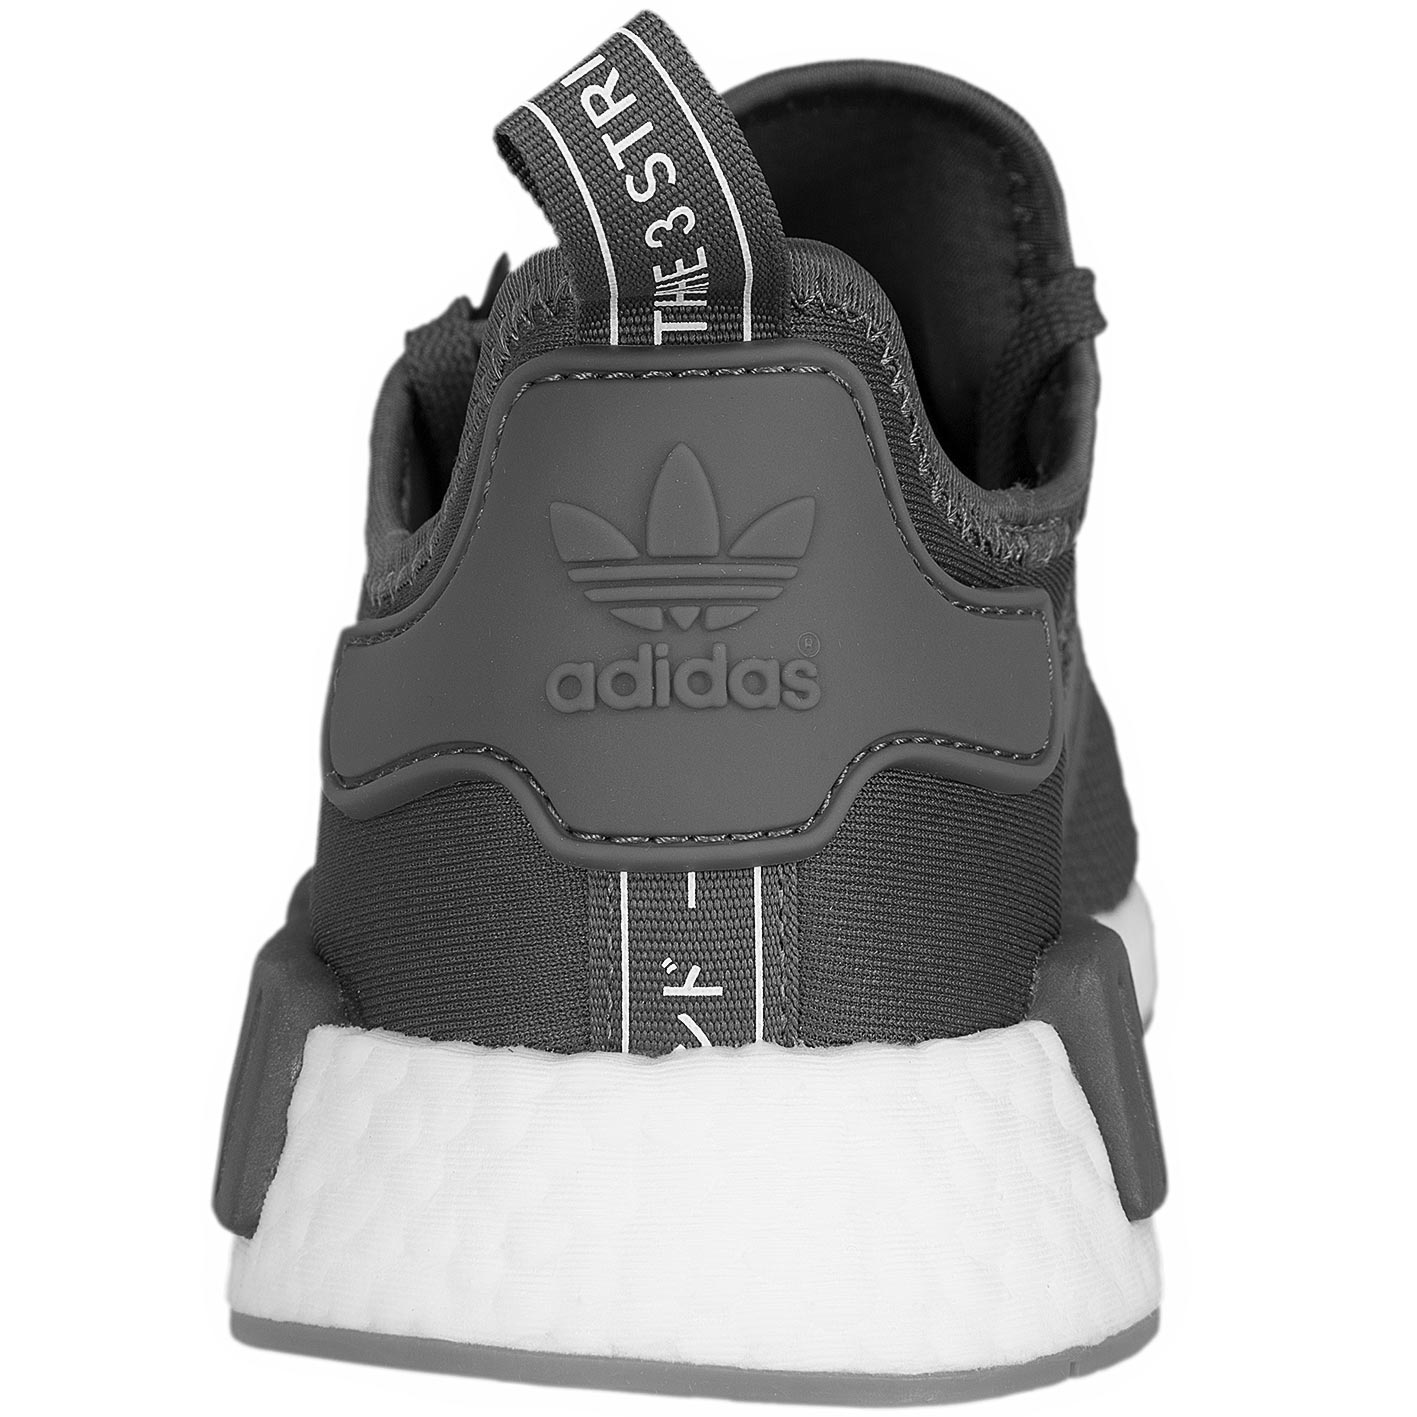 ☆ Adidas Originals Sneaker NMD R1 grau - hier bestellen!